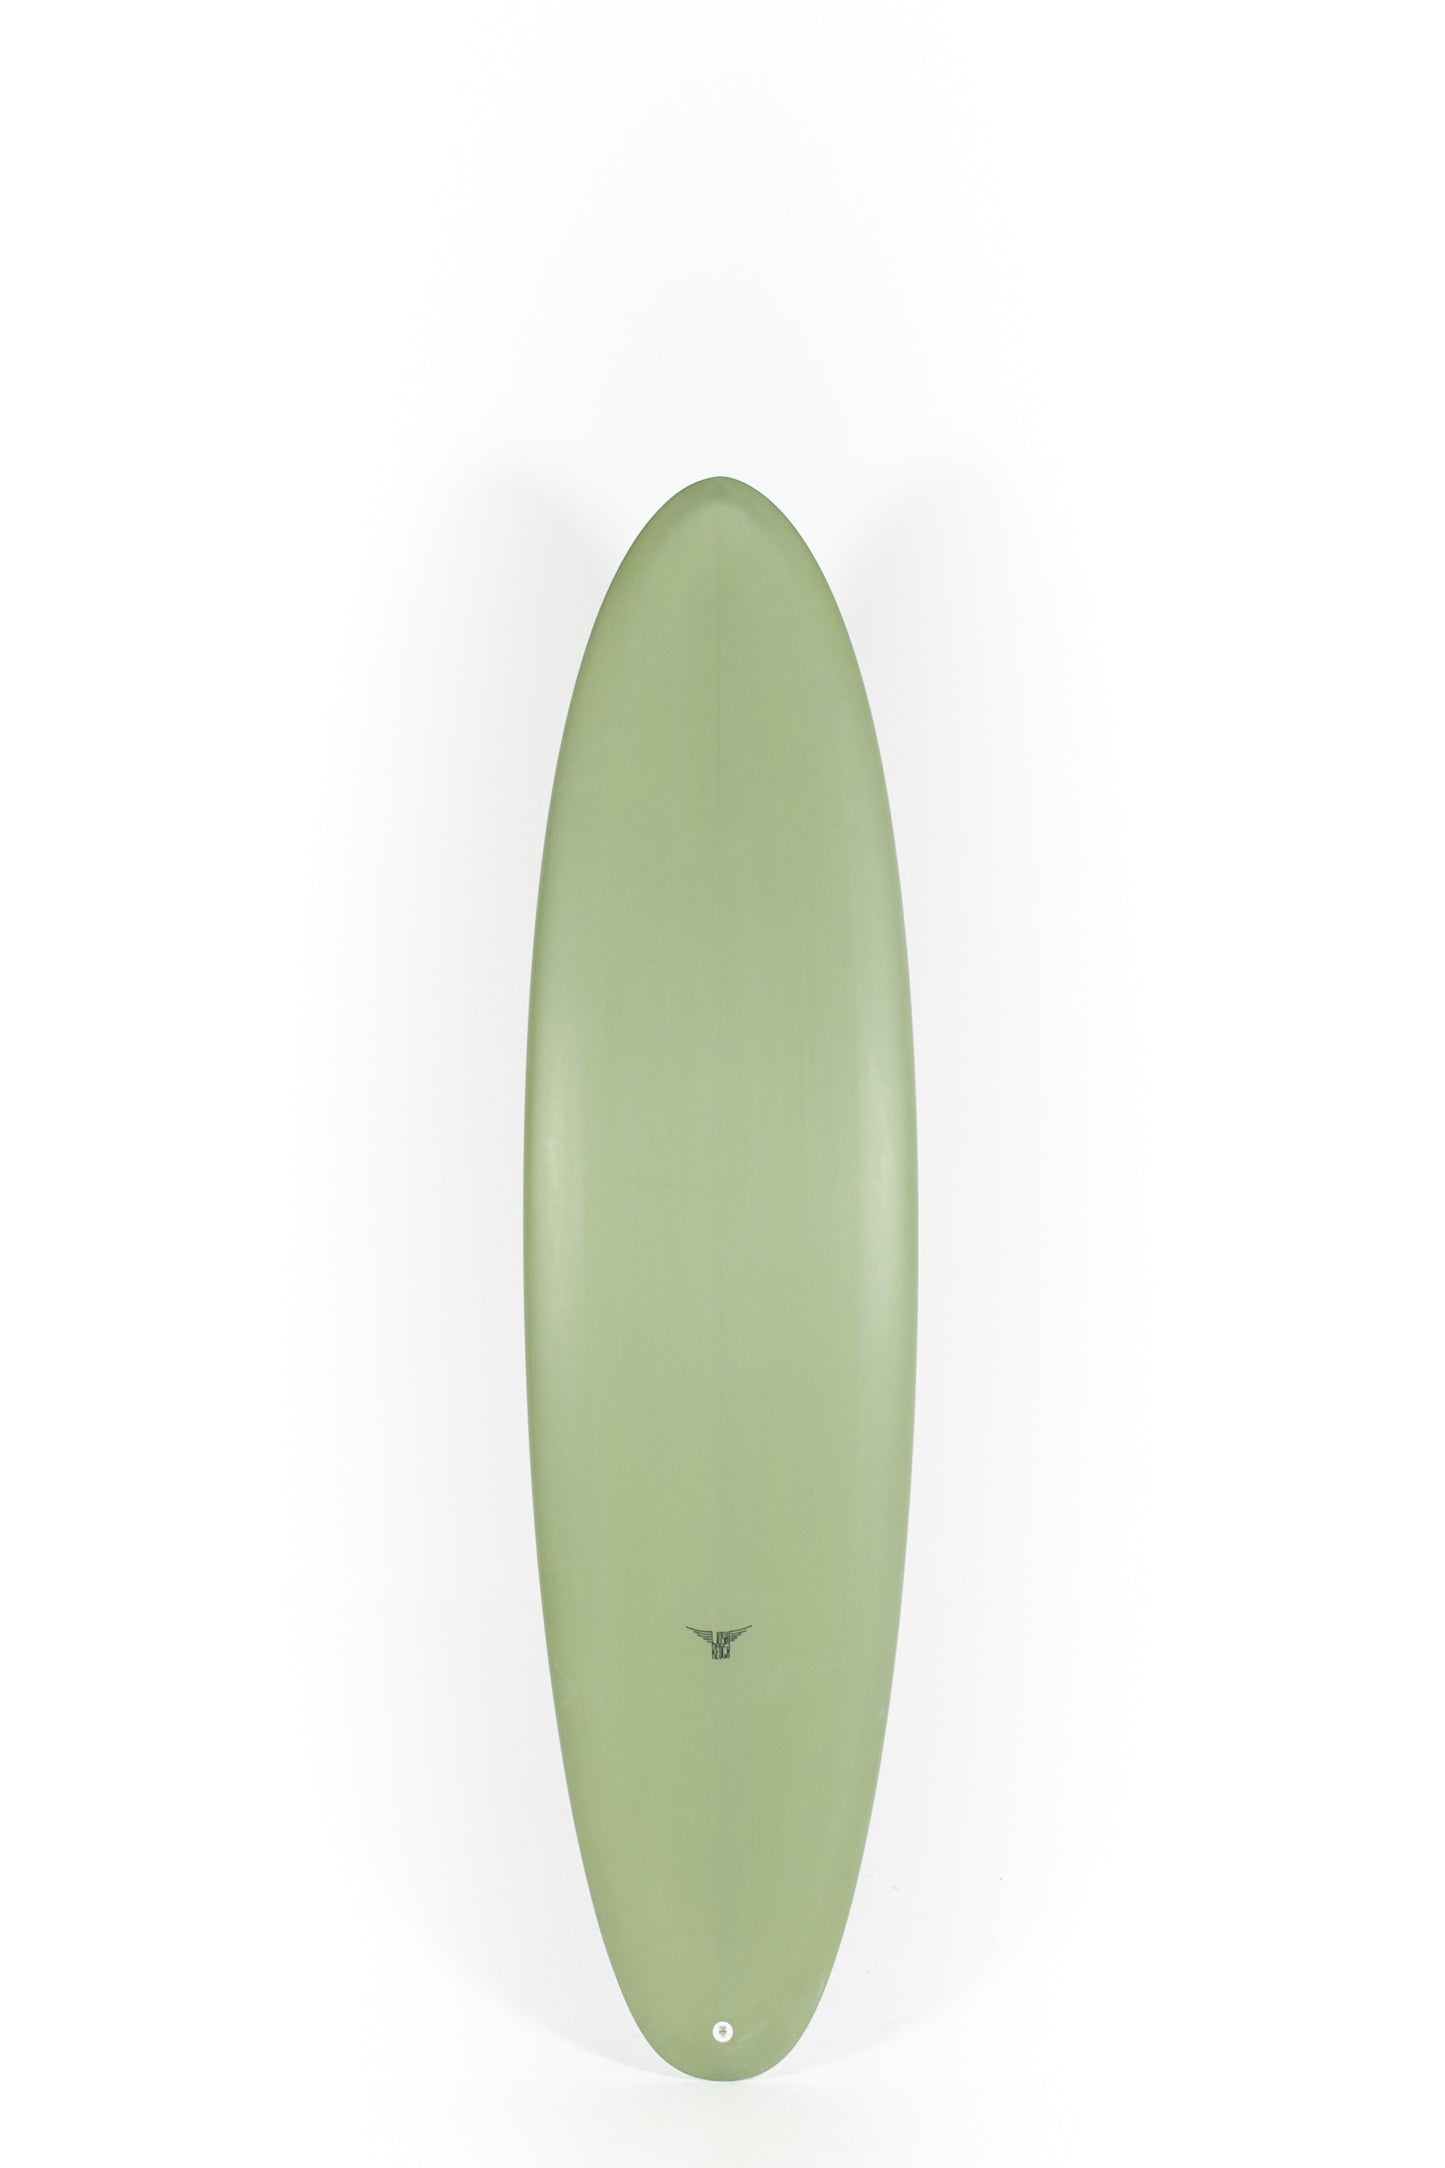 Pukas Surf Shop_Joshua Keogh Surfboard - LIBERATOR SINGLE by Joshua Keogh - 7'2" x 21 1/2 x 2 11/16 - LIBERATORS72